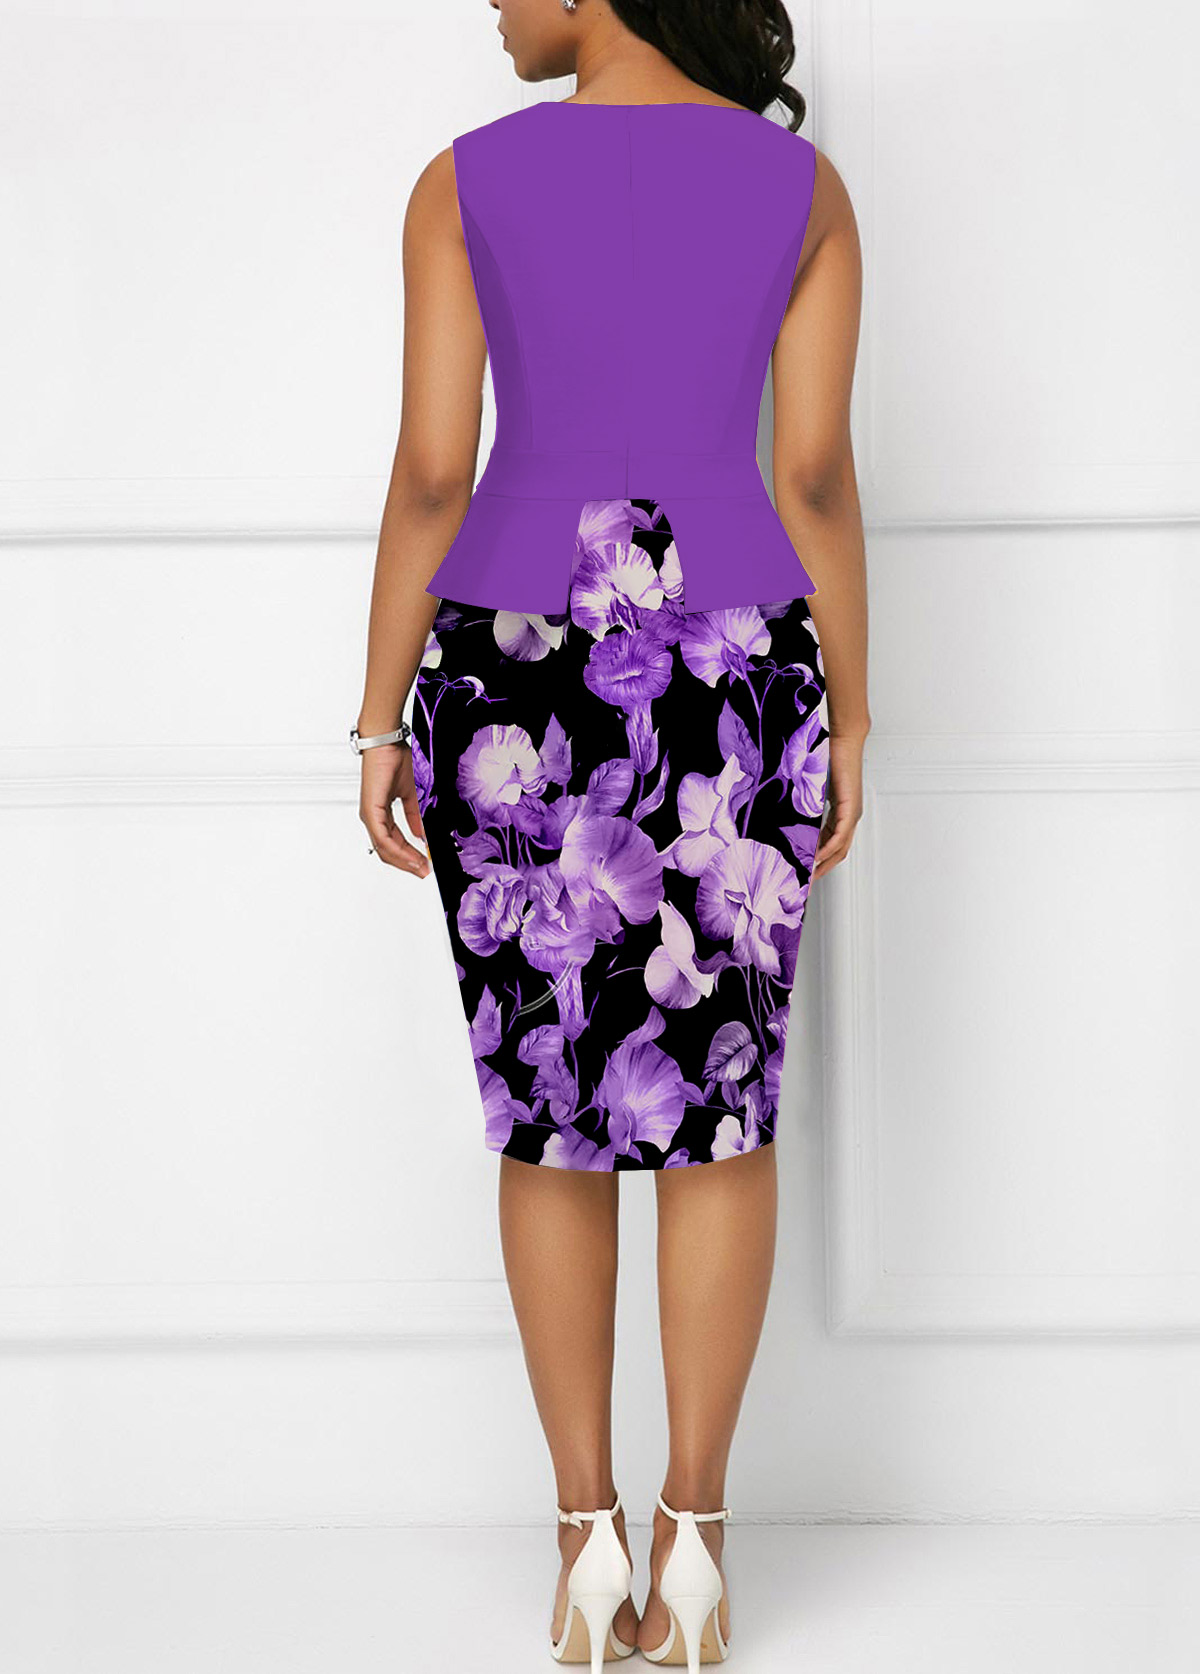 Floral Print Fake 2in1 Purple Bodycon Dress